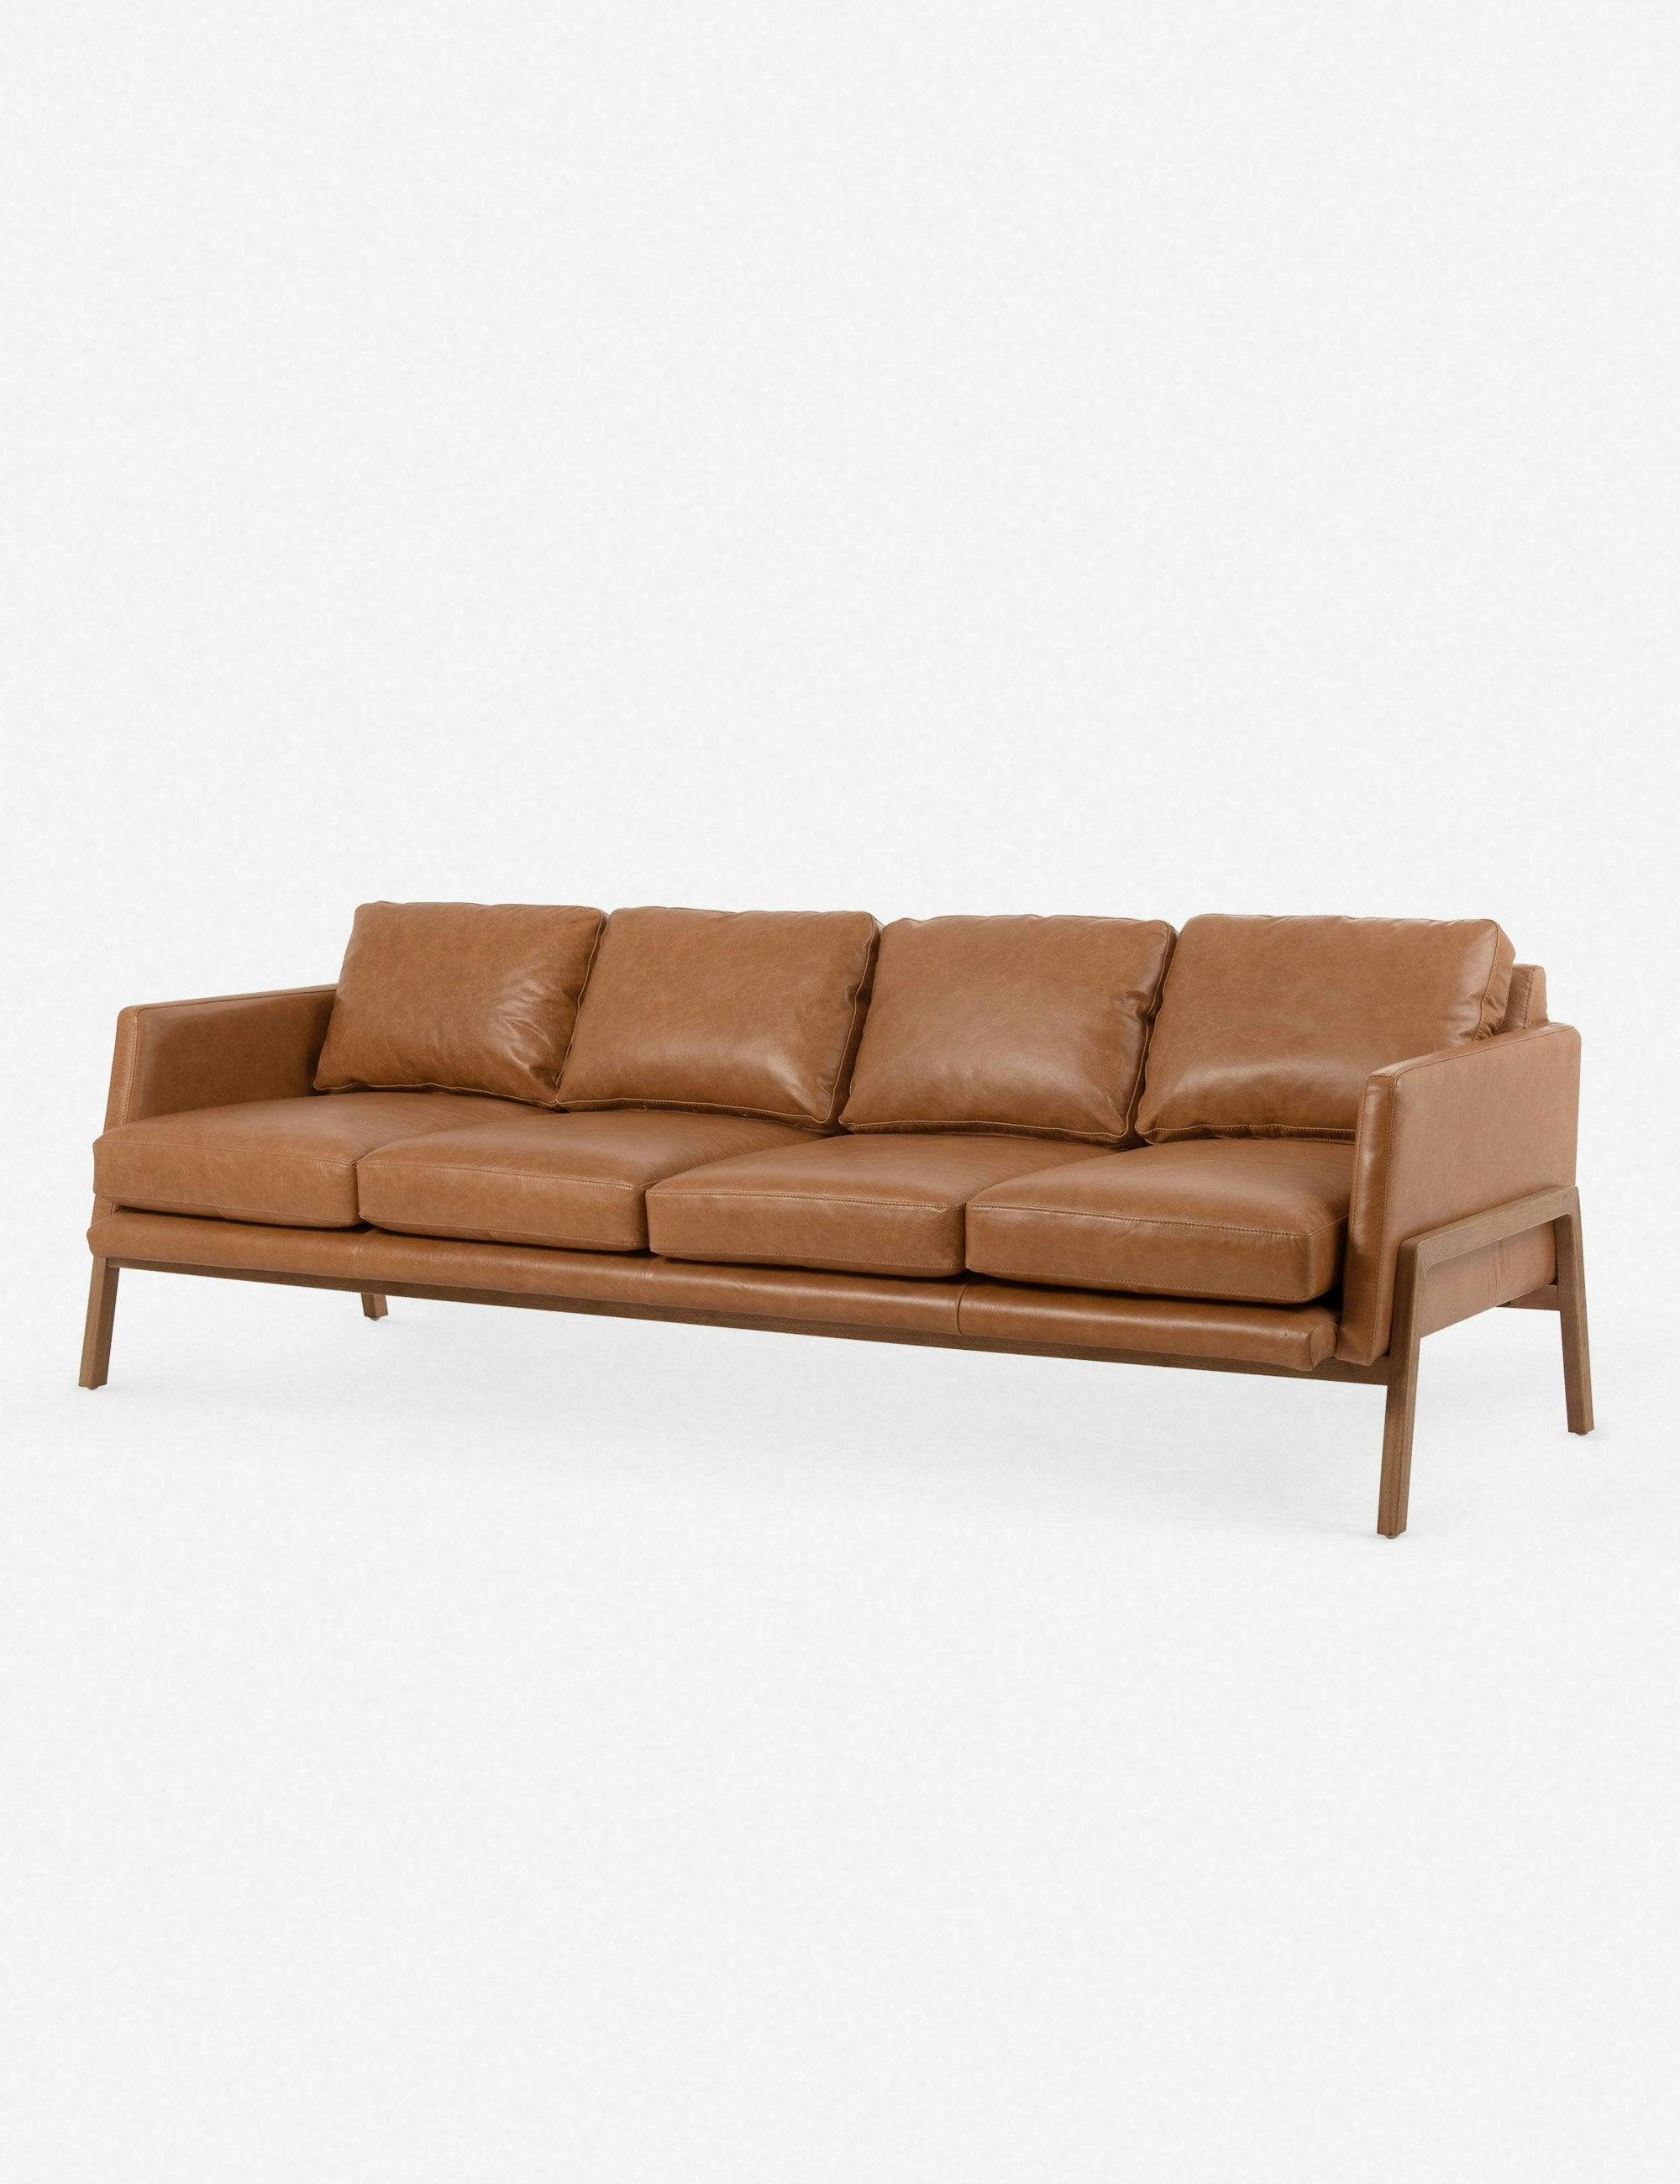 Afton Tan Leather Sofa